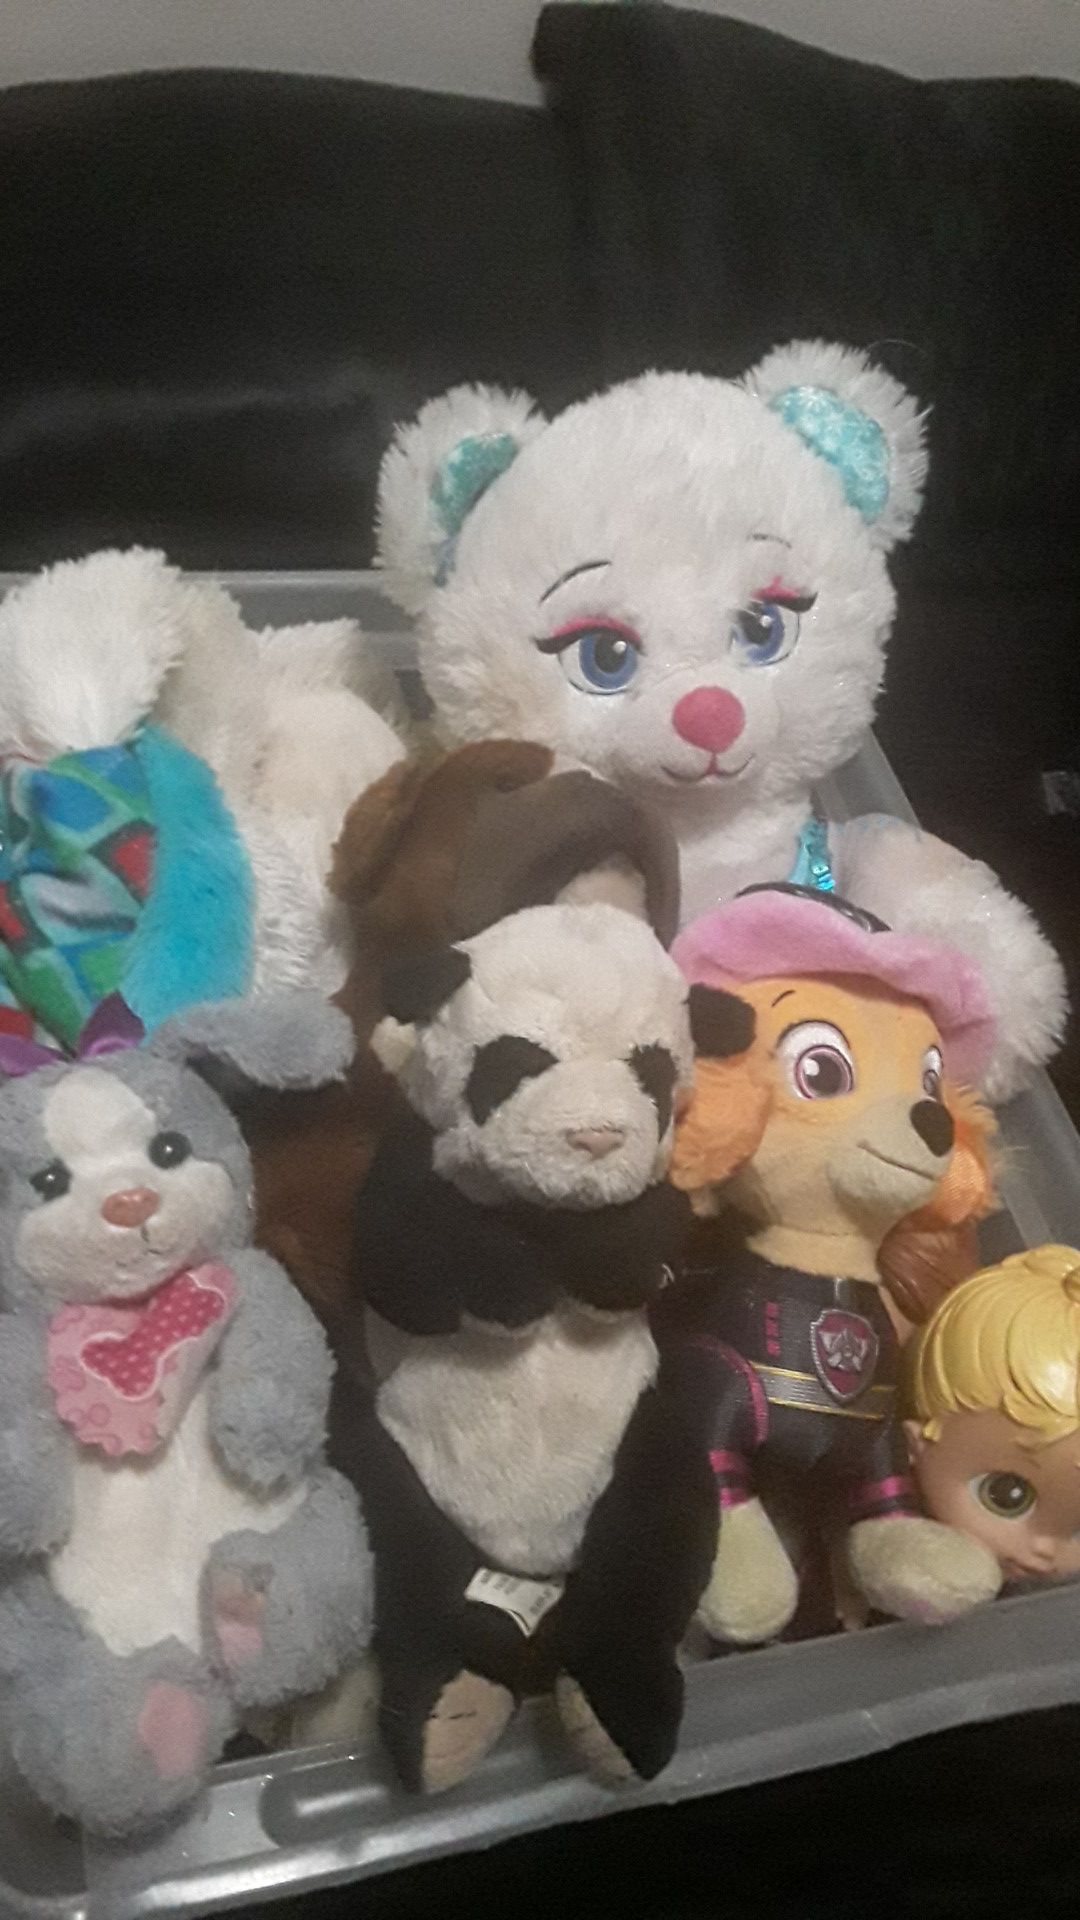 Box of Stuffed animals and not needing toys!